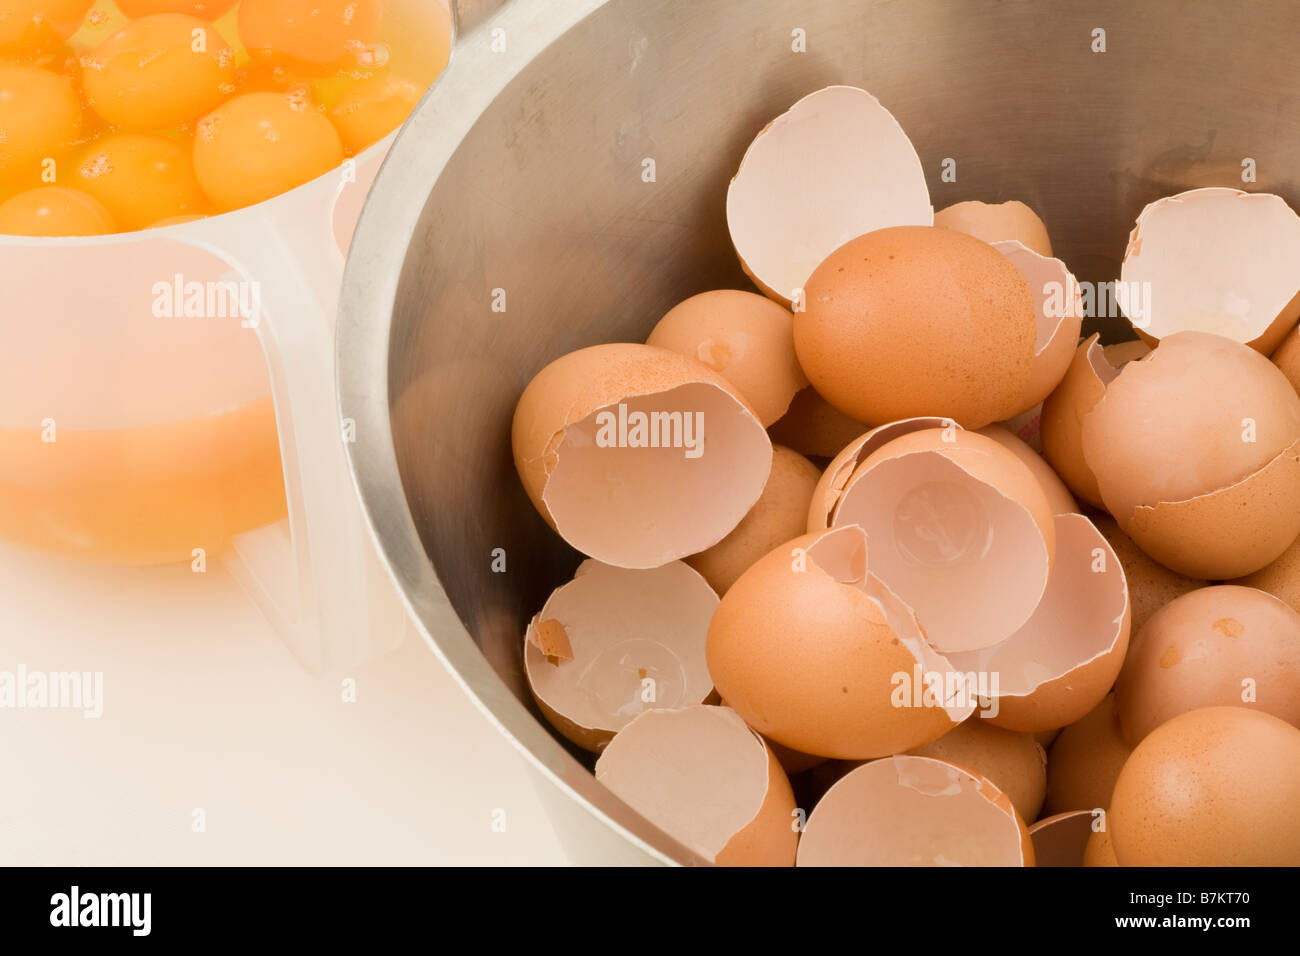 Eggshells and Eggs Stock Photo